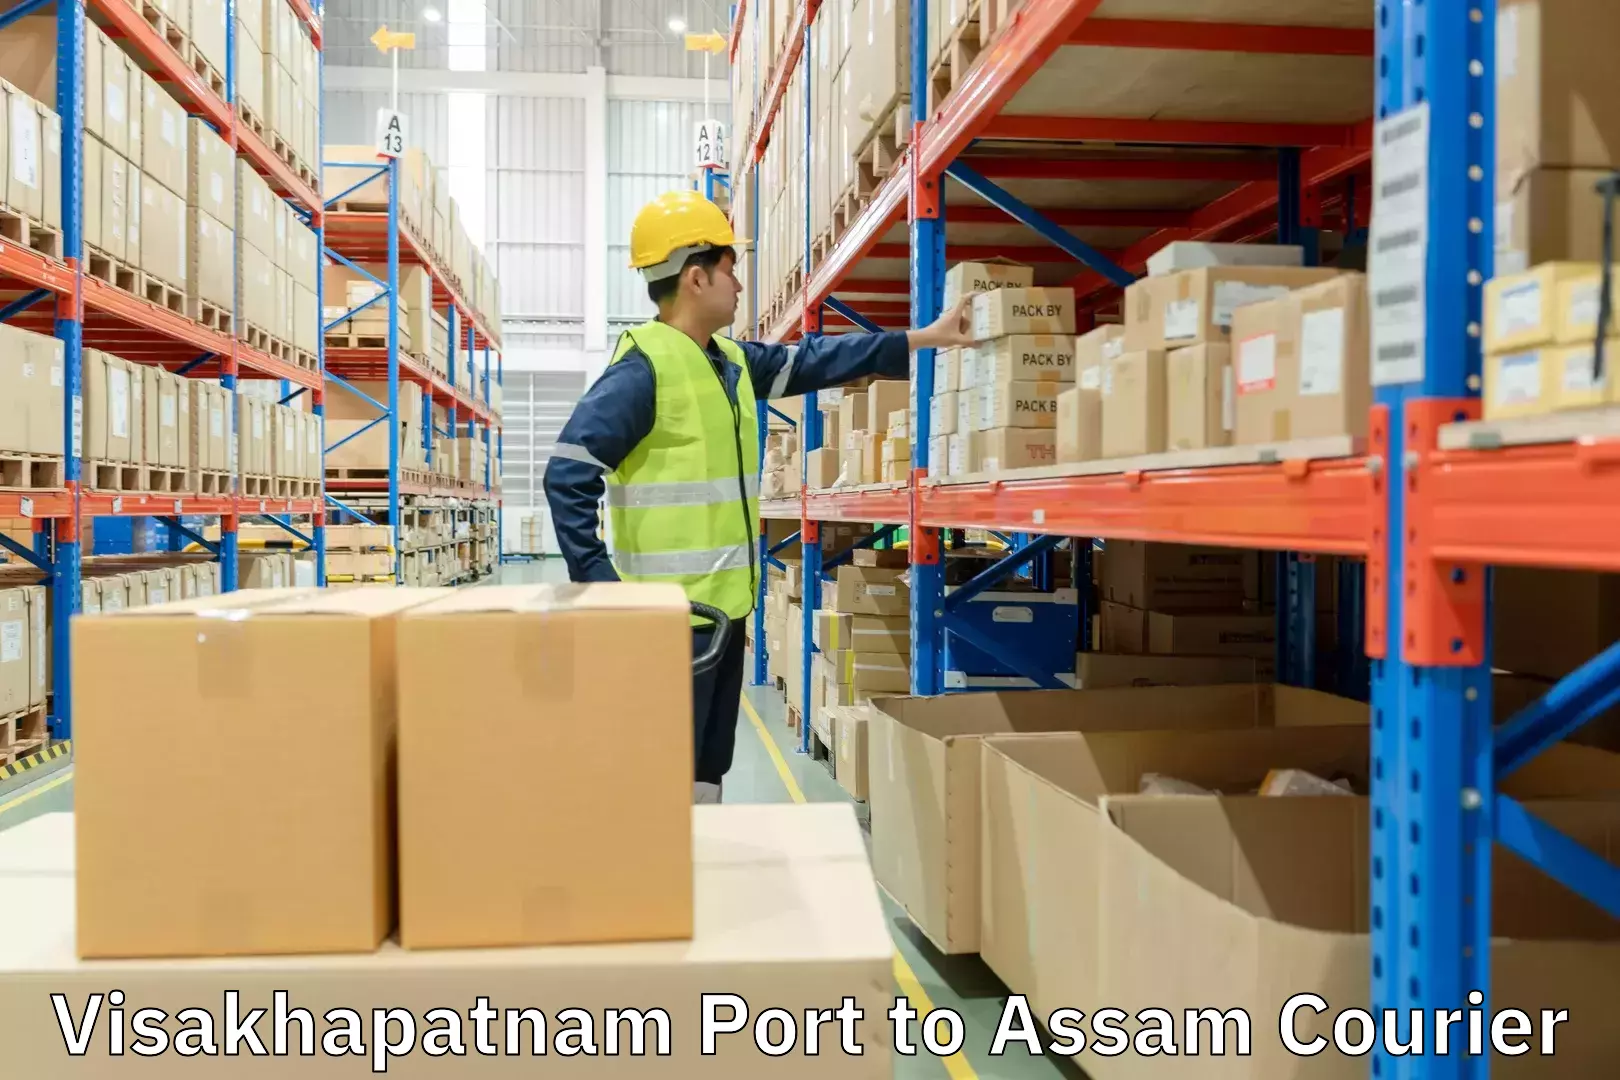 Global logistics network Visakhapatnam Port to Assam